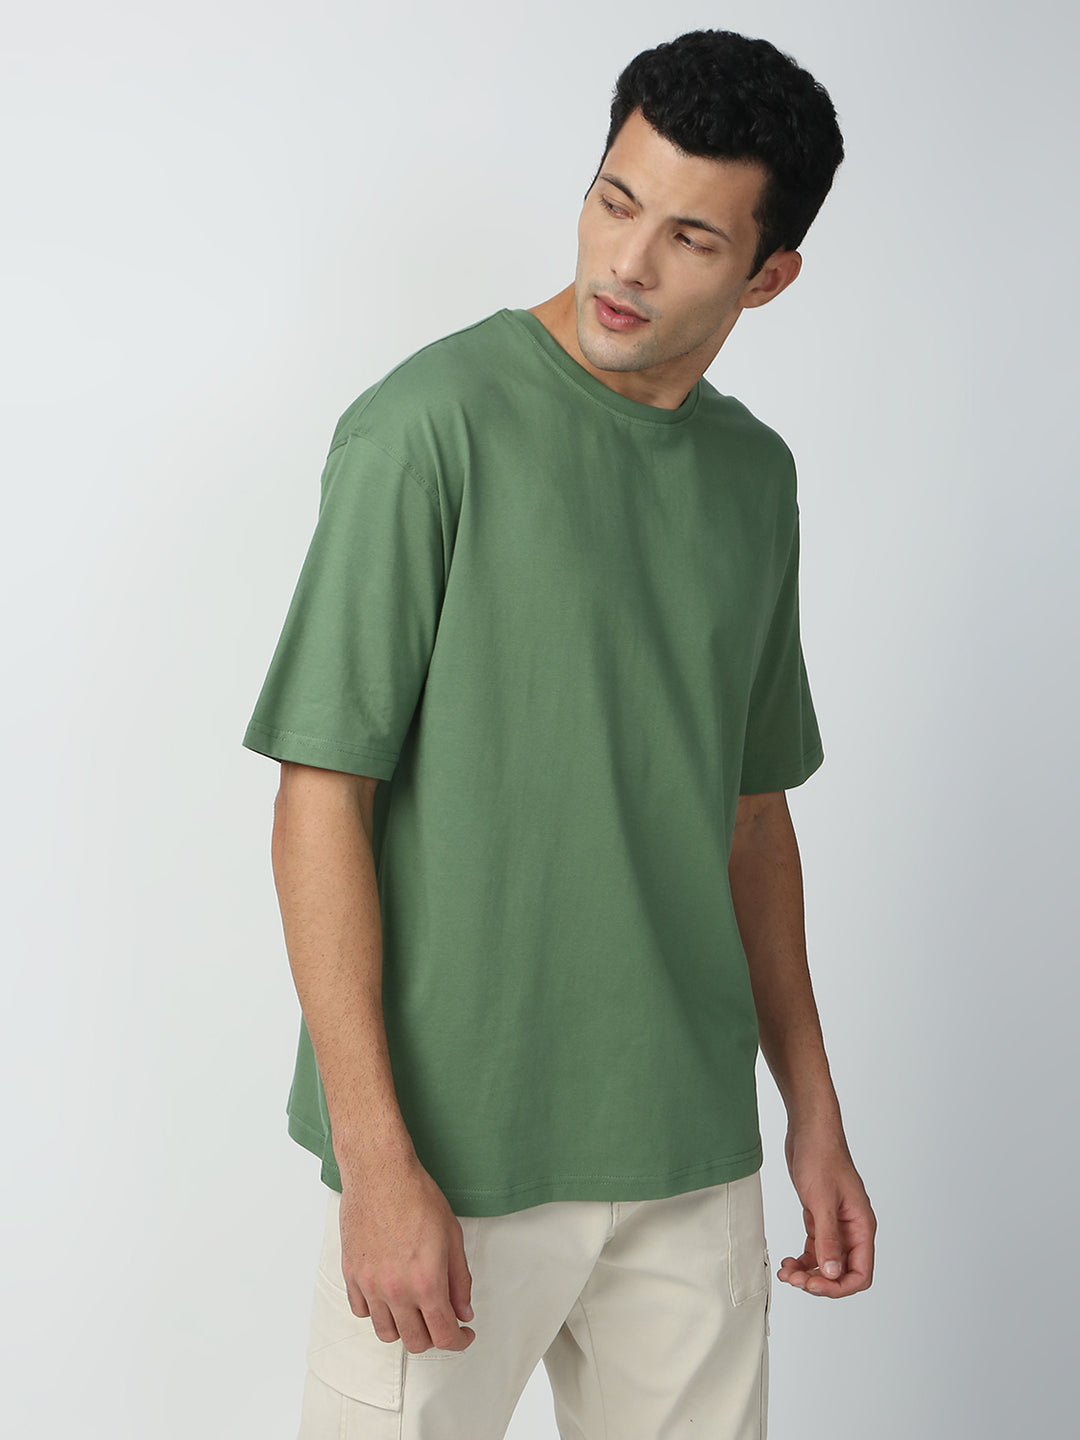 Buy Blamblack Men's Baggy Green Color Back Printed Round Neck T-Shirt